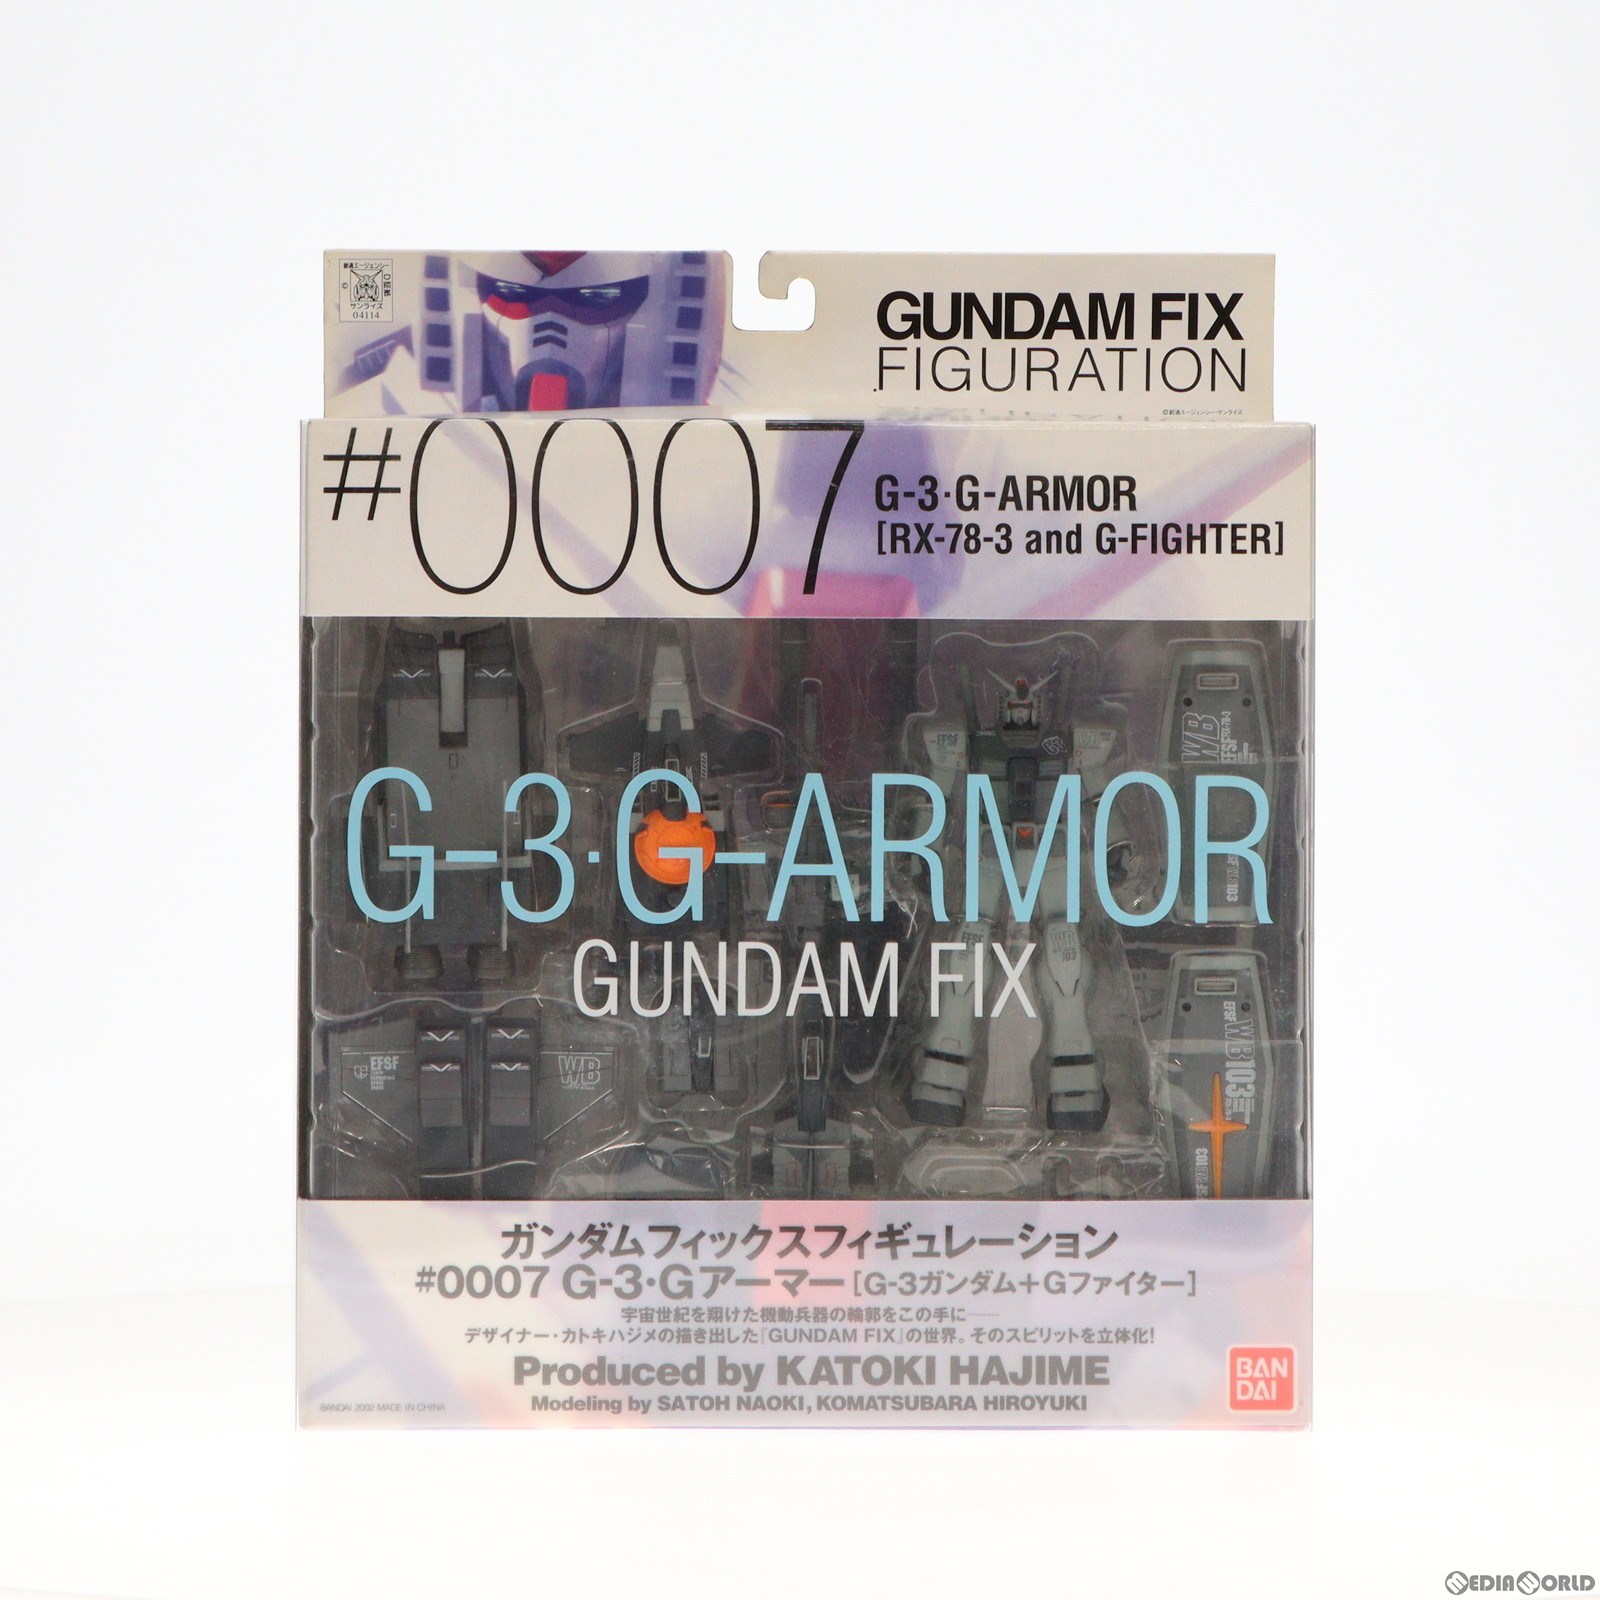 GUNDAM FIX FIGURATION #0007 G-3 Gアーマーの商品画像